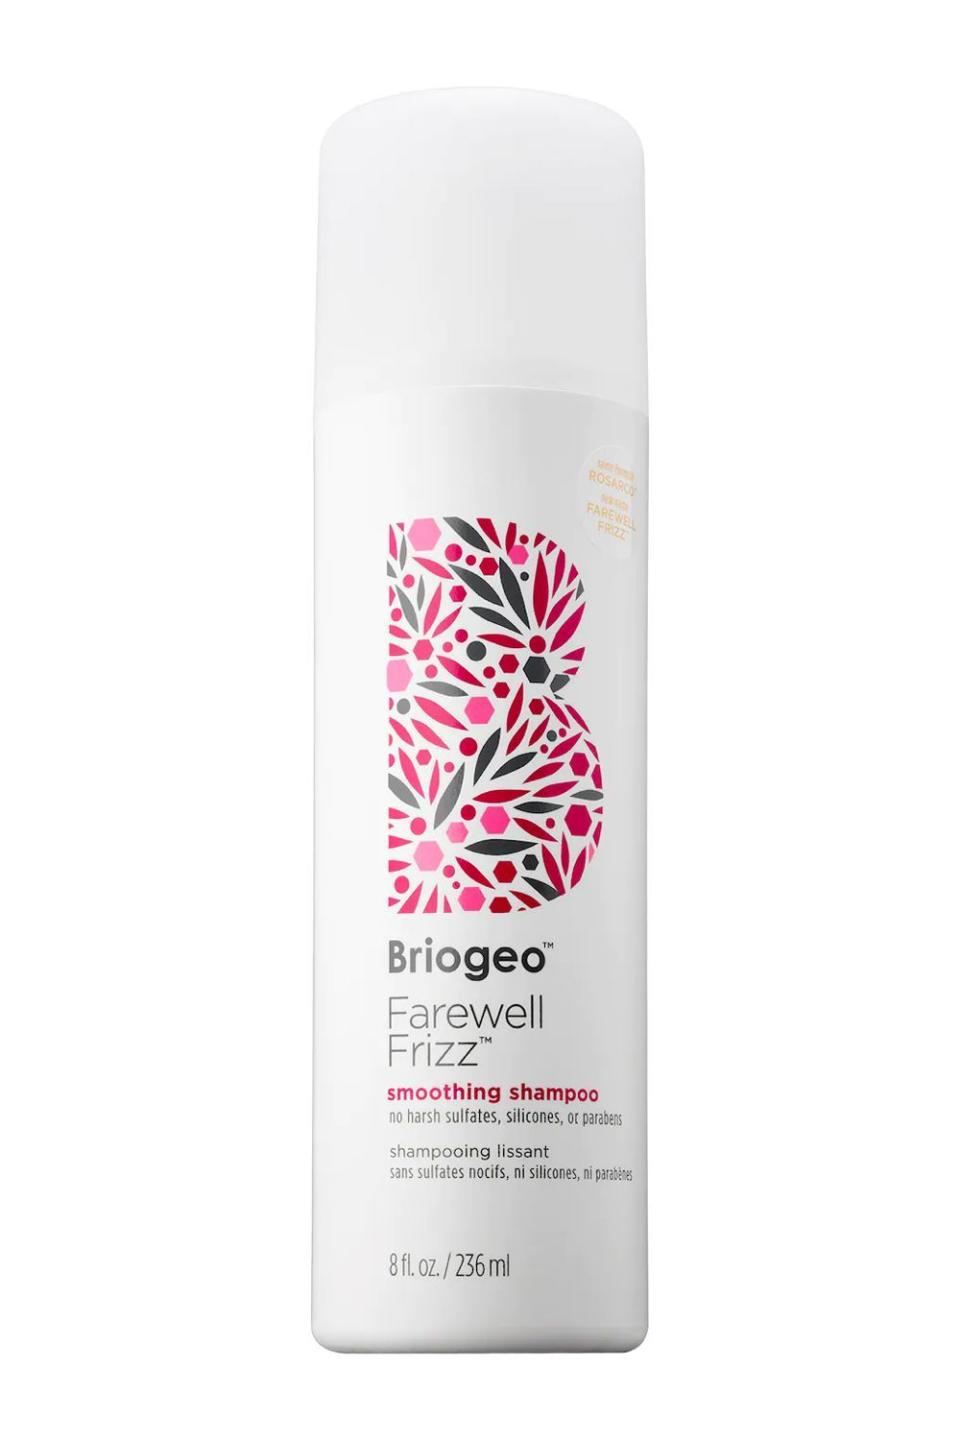 11) Briogeo Farewell Frizz Smoothing Shampoo